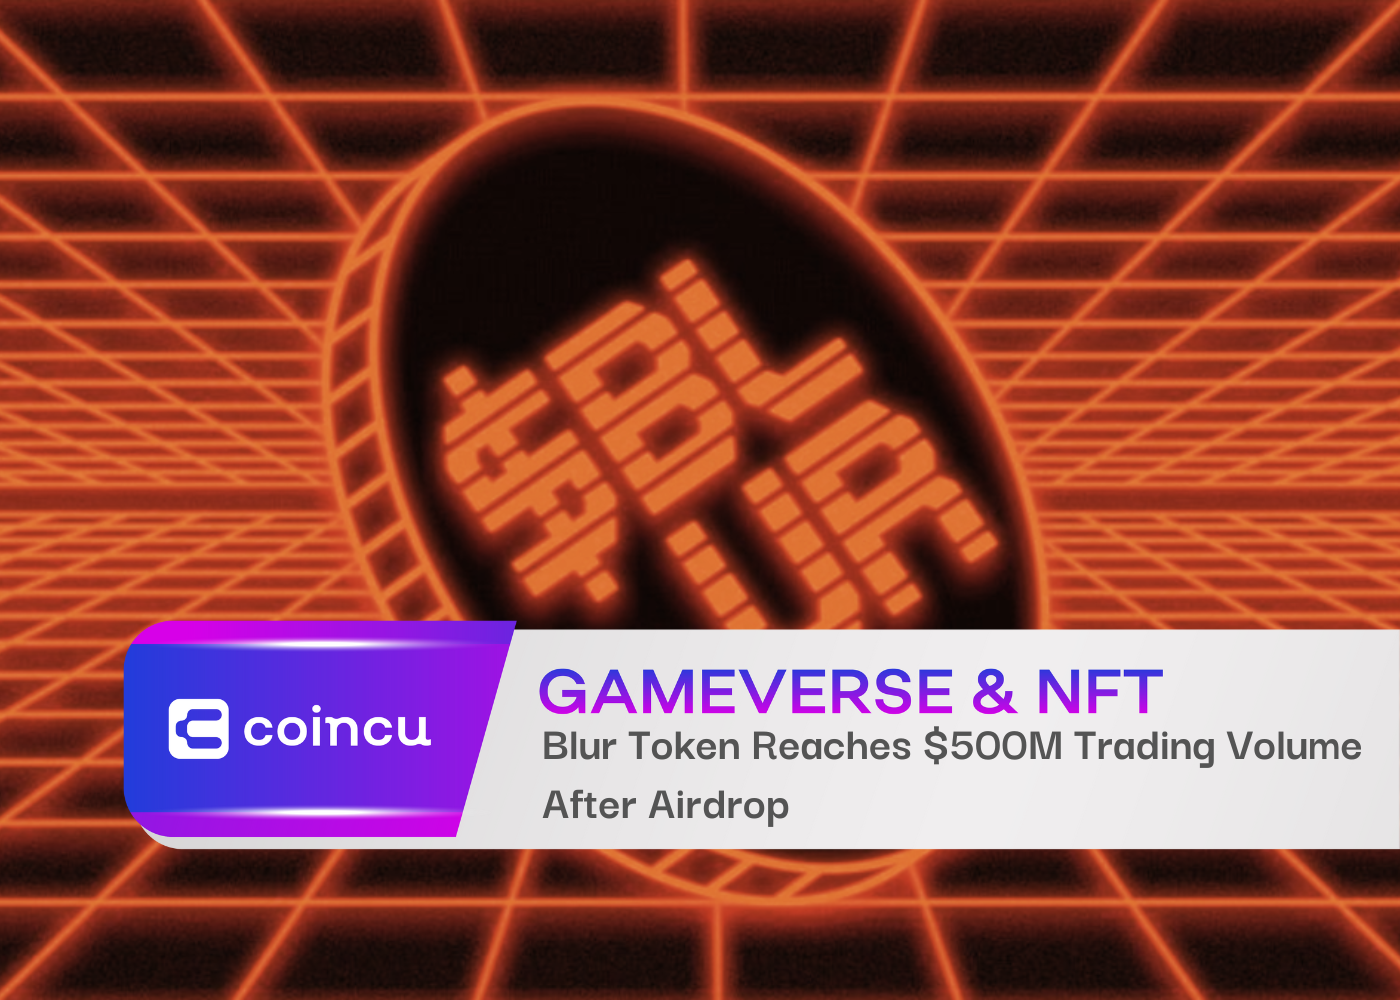 Blur Token Reaches 500M Trading Volume